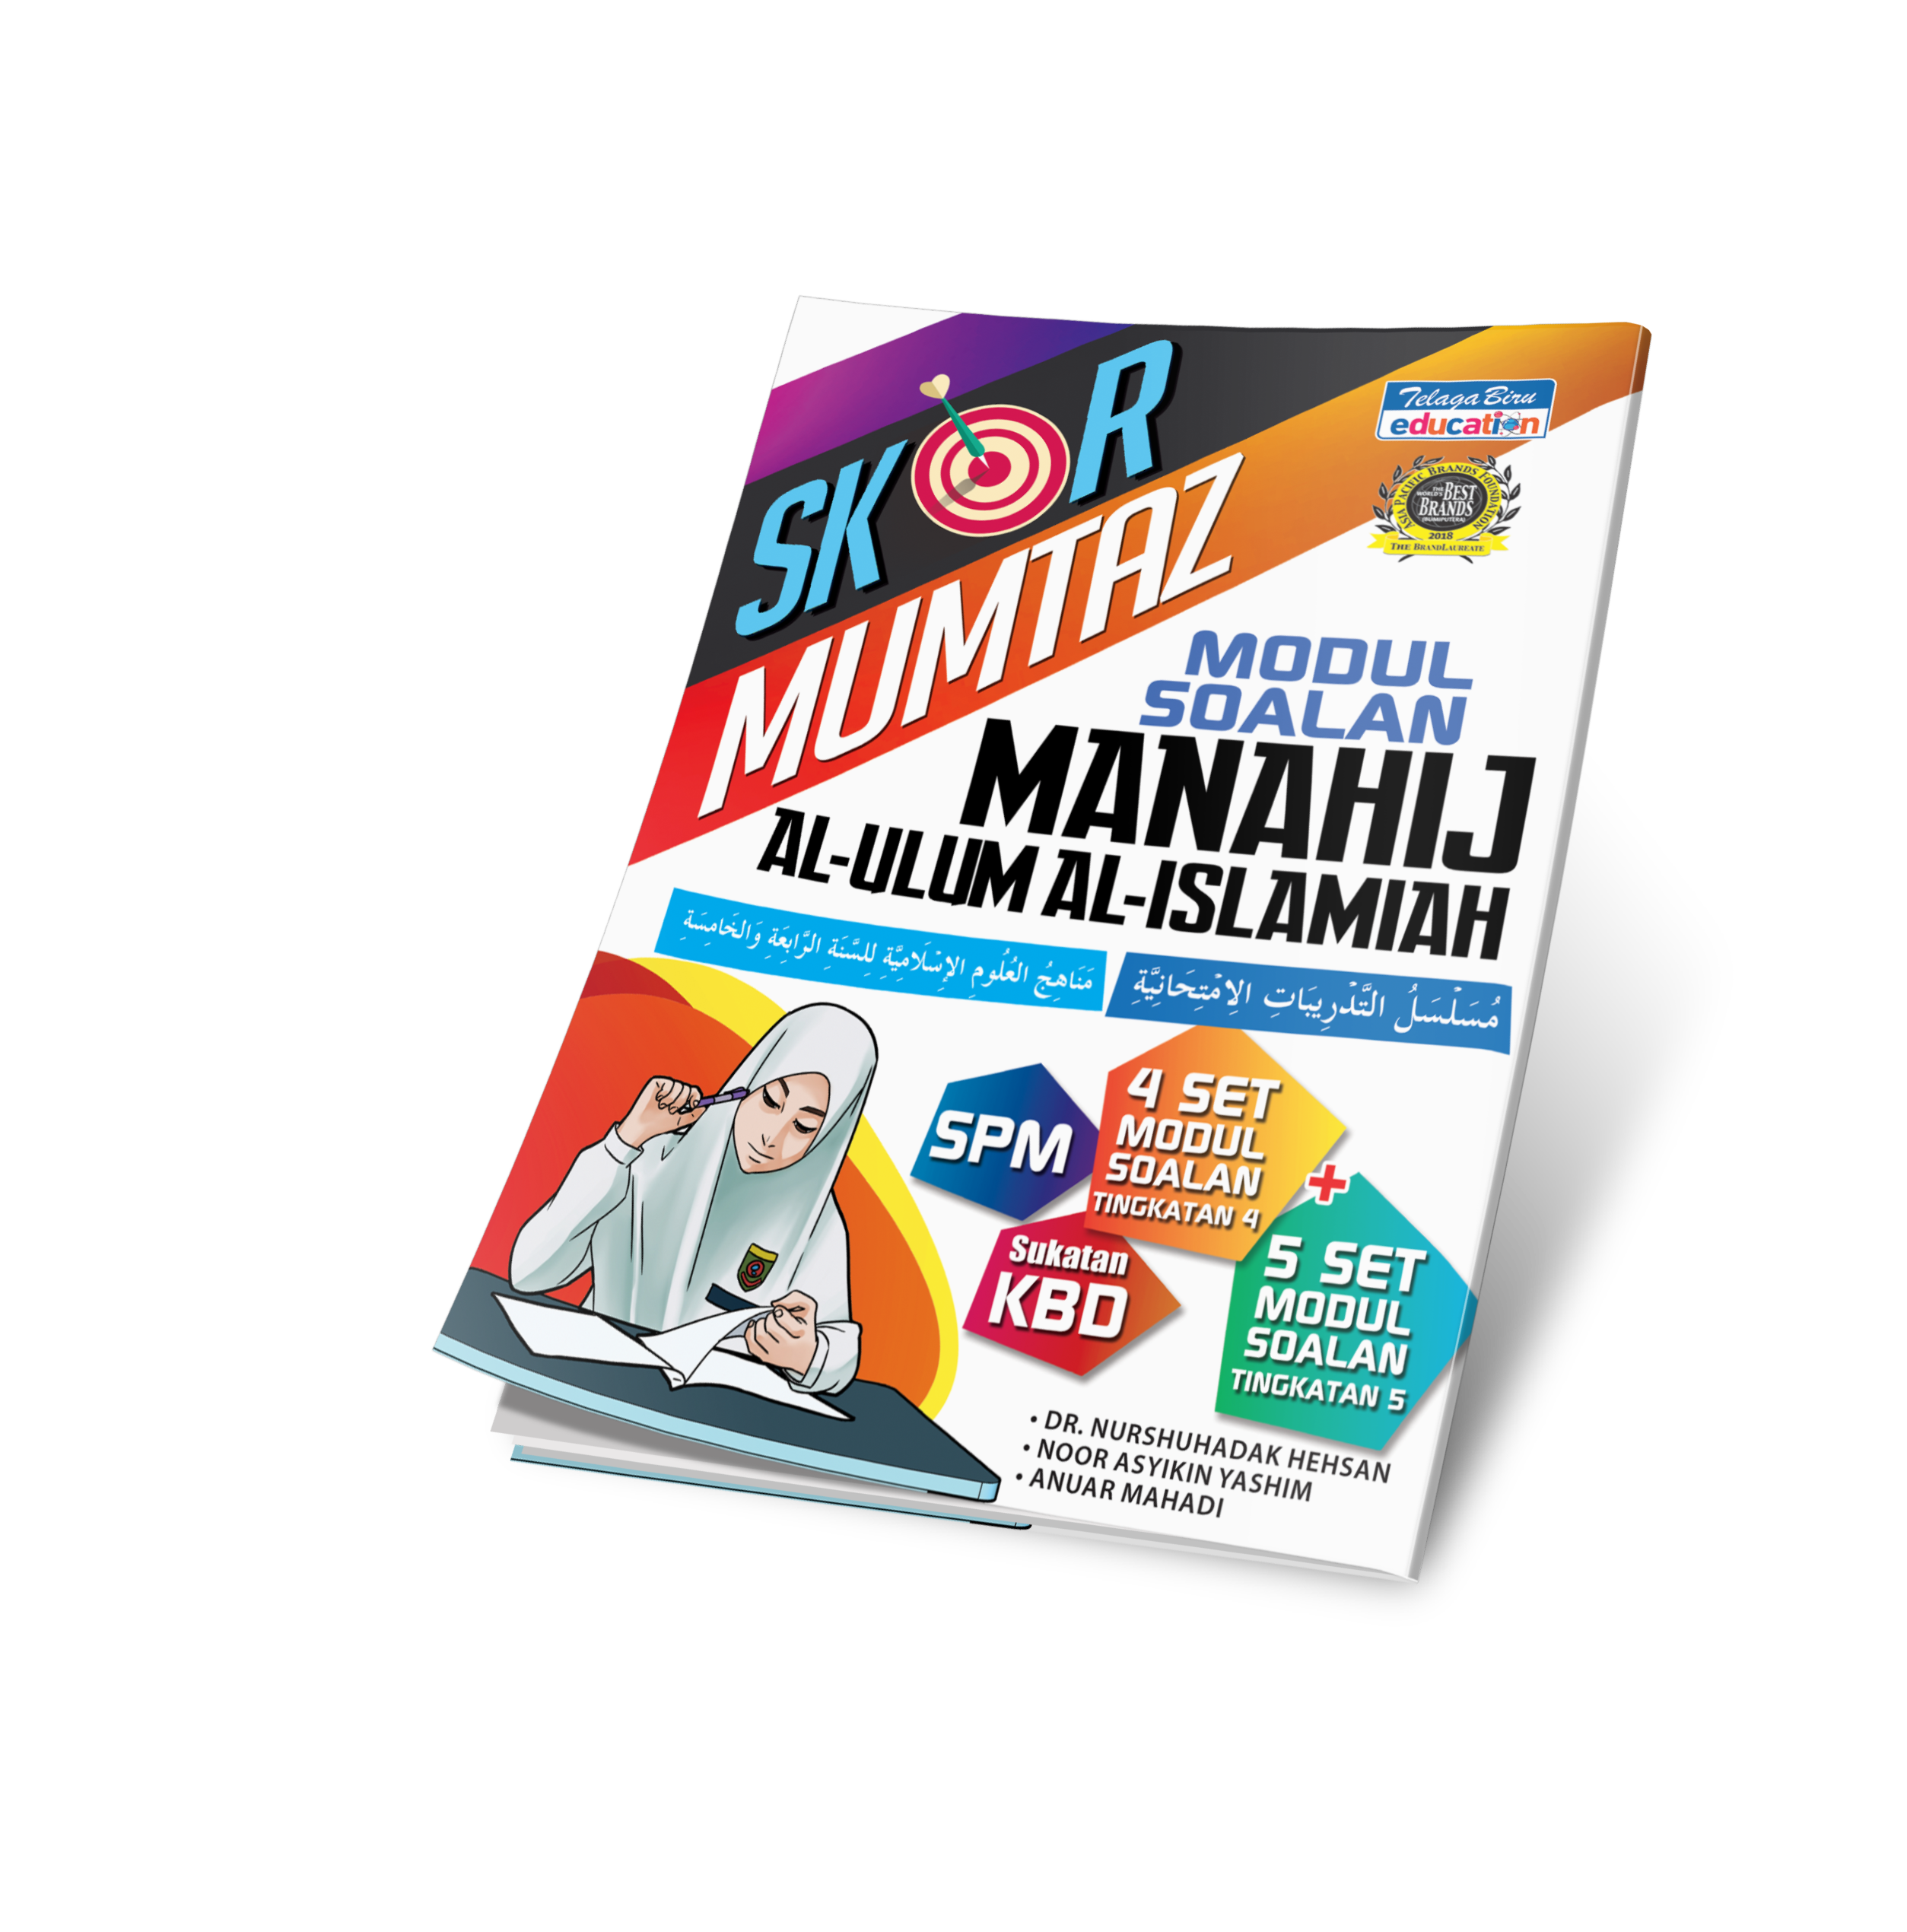 Skor Mumtaz Modul Soalan Manahij Al-Ulum Al-Islamiah SPM - (TBBS1251)